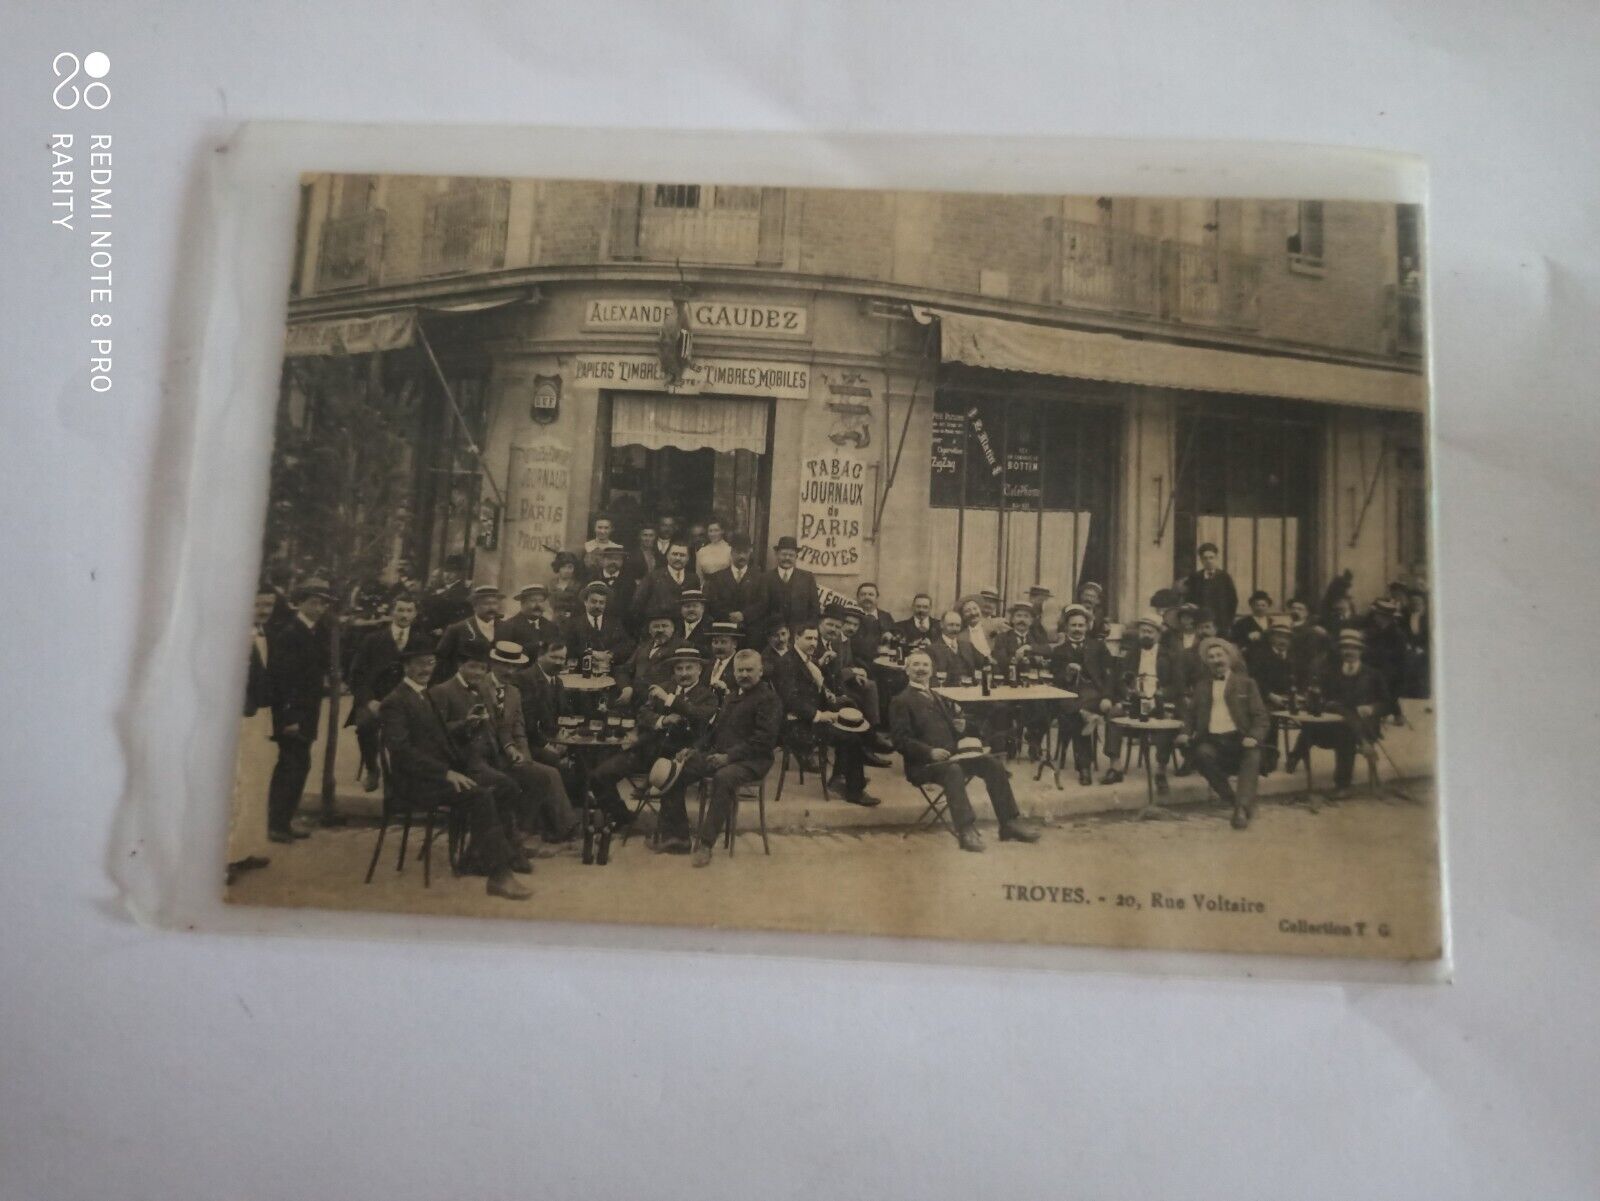 antique postcard ALEXANDE GAUDEZ NICAS TIMER MOBILE STAMPS Troyes